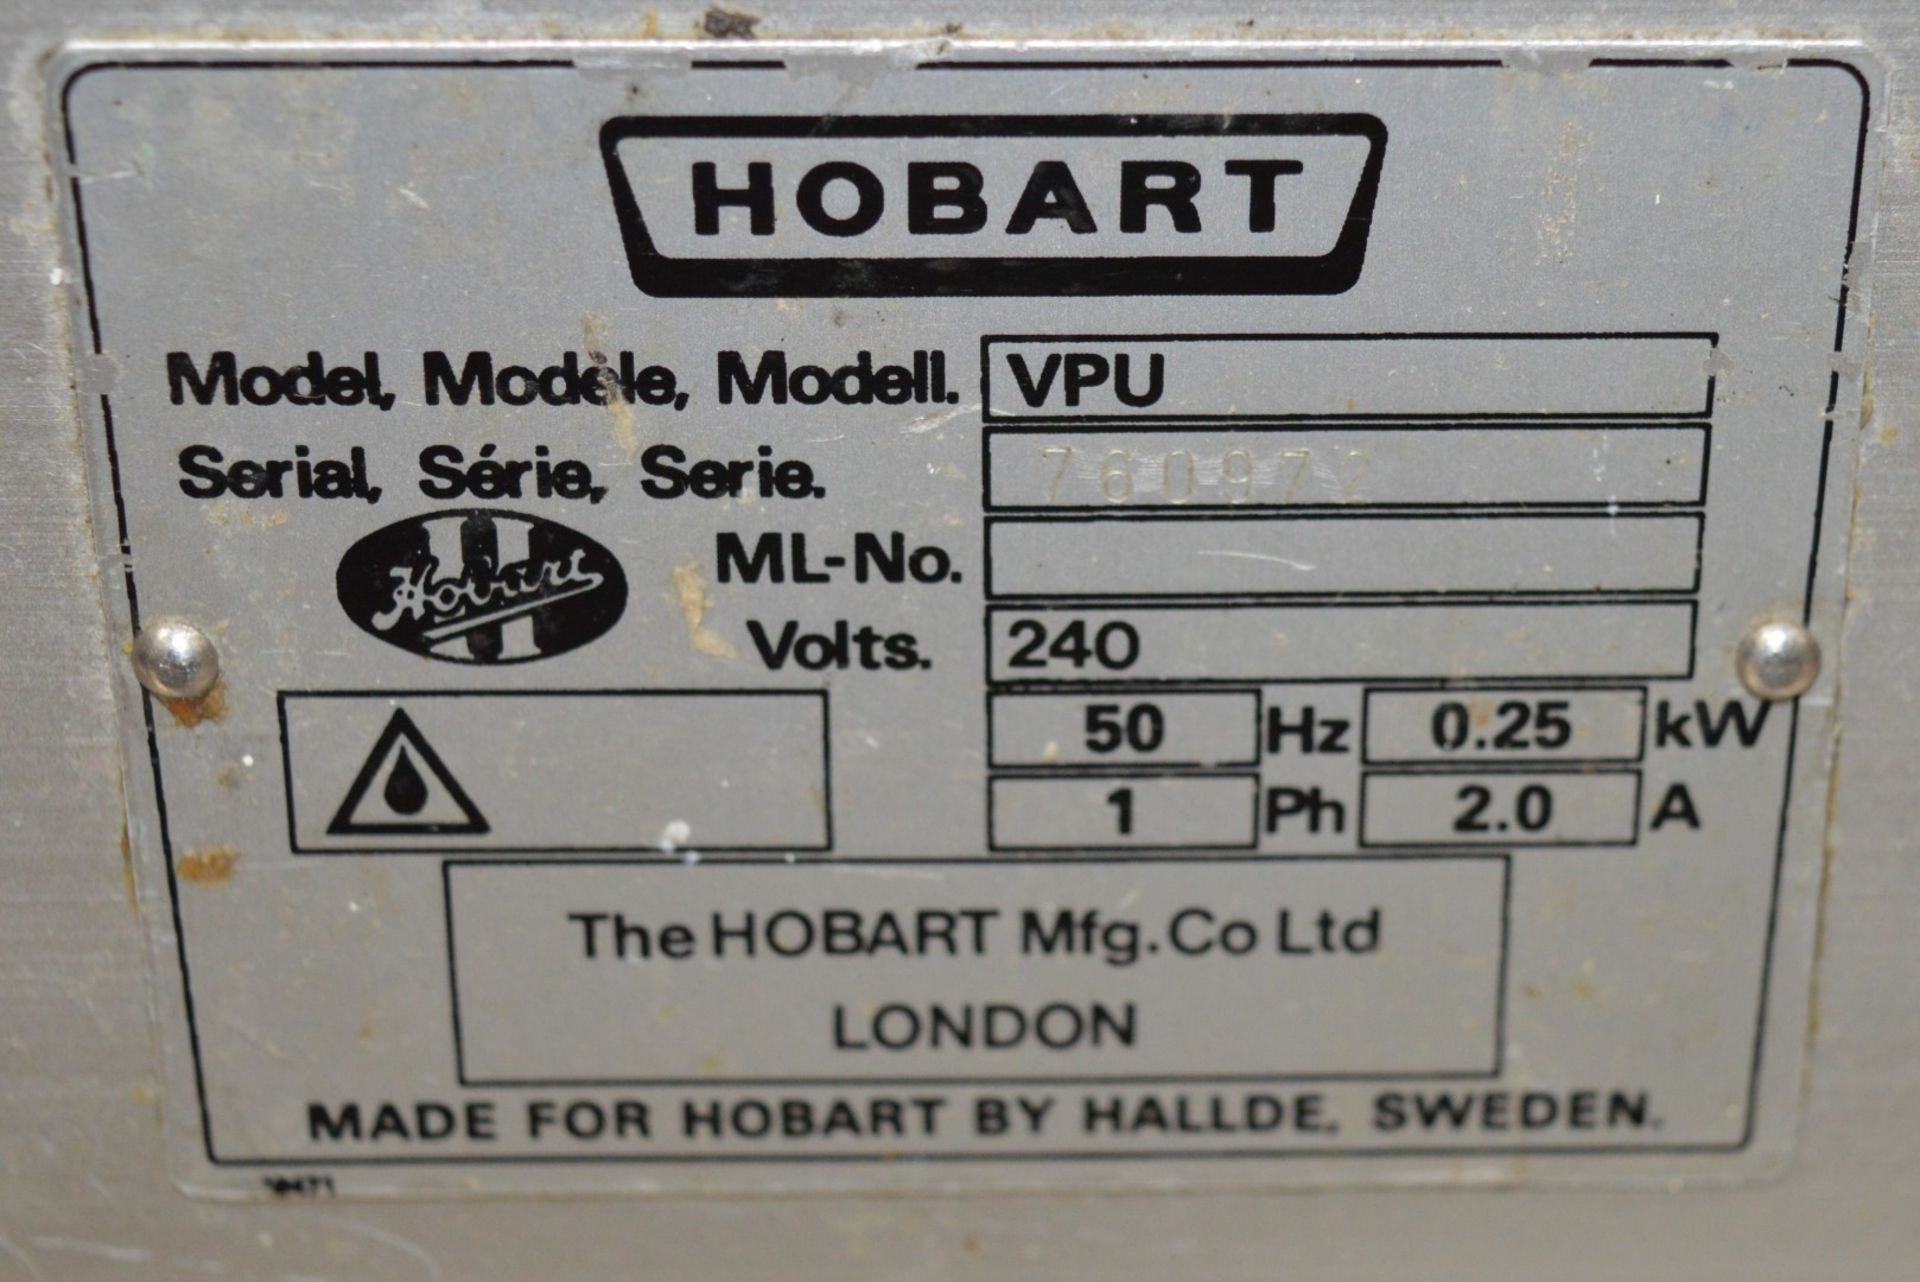 1 x Hobart vpu Vegetable Prep Machine - CL057 - Ref WEL035 - Commercial Catering Equipment - - Image 5 of 5